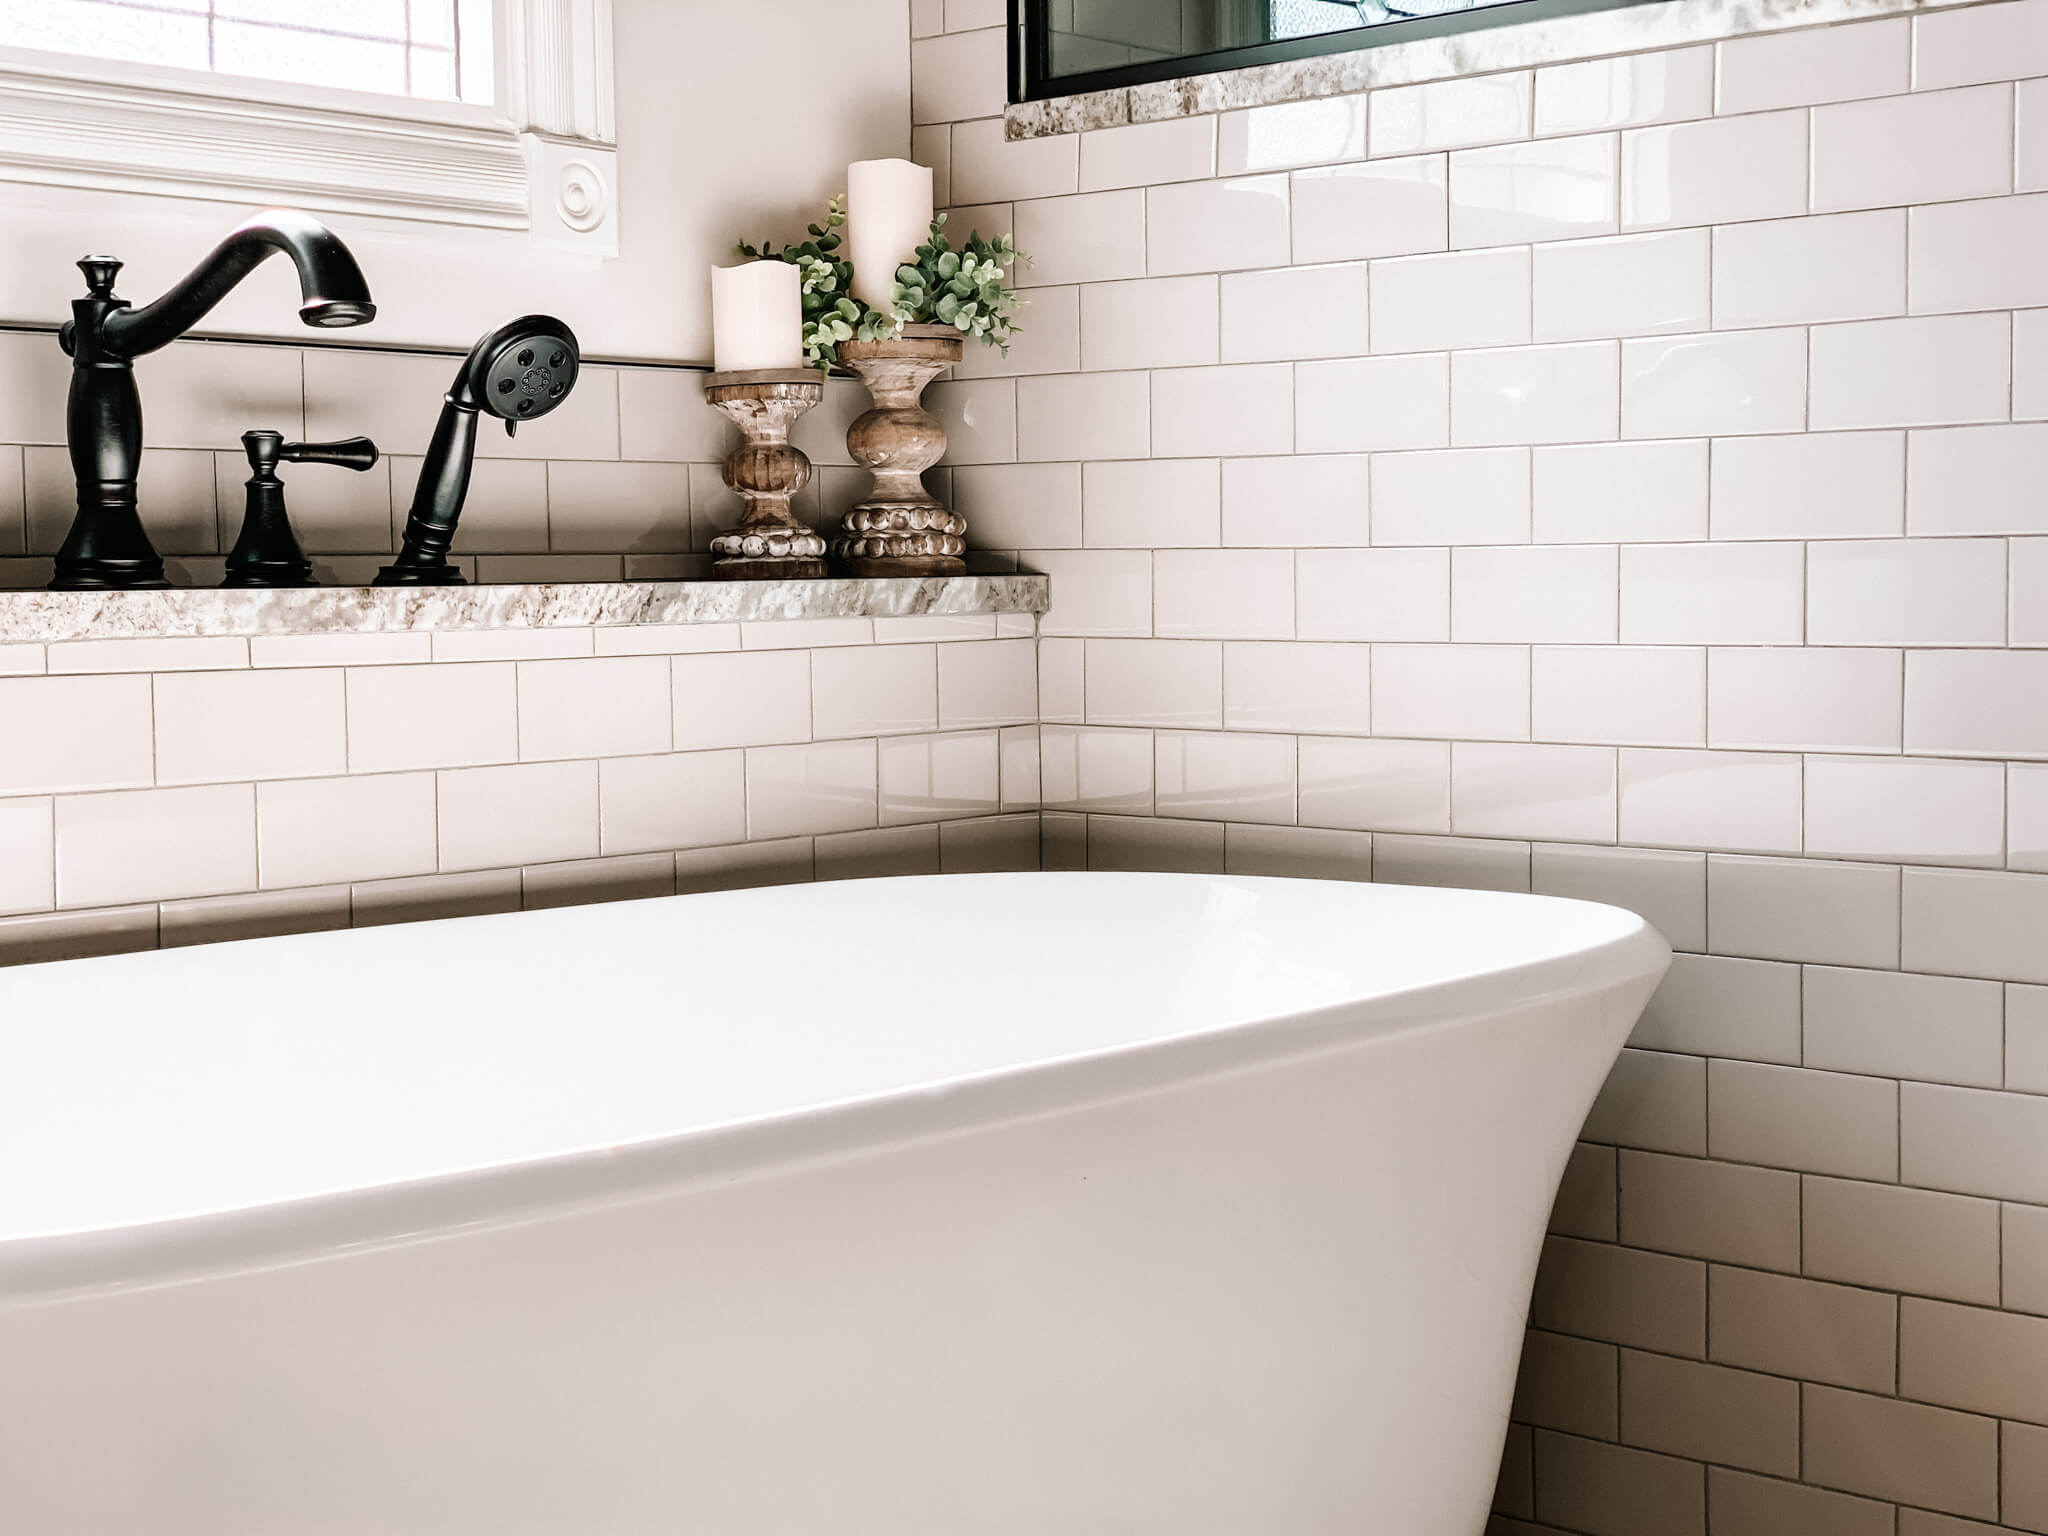 Estimate Bathroom Remodel Costs in 6 Steps - Sanctuary Homes